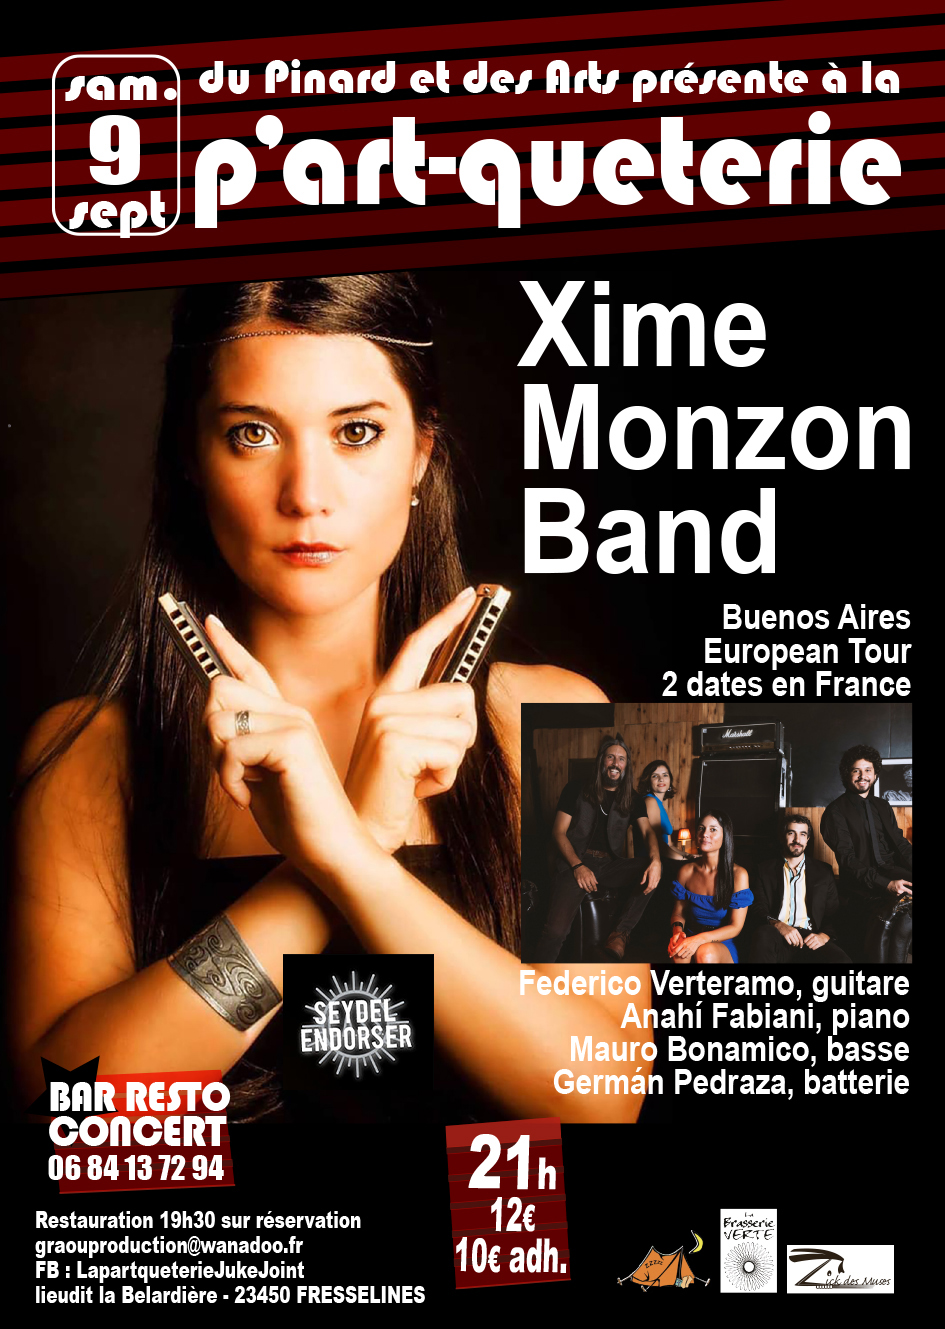 Xime Monzon Band